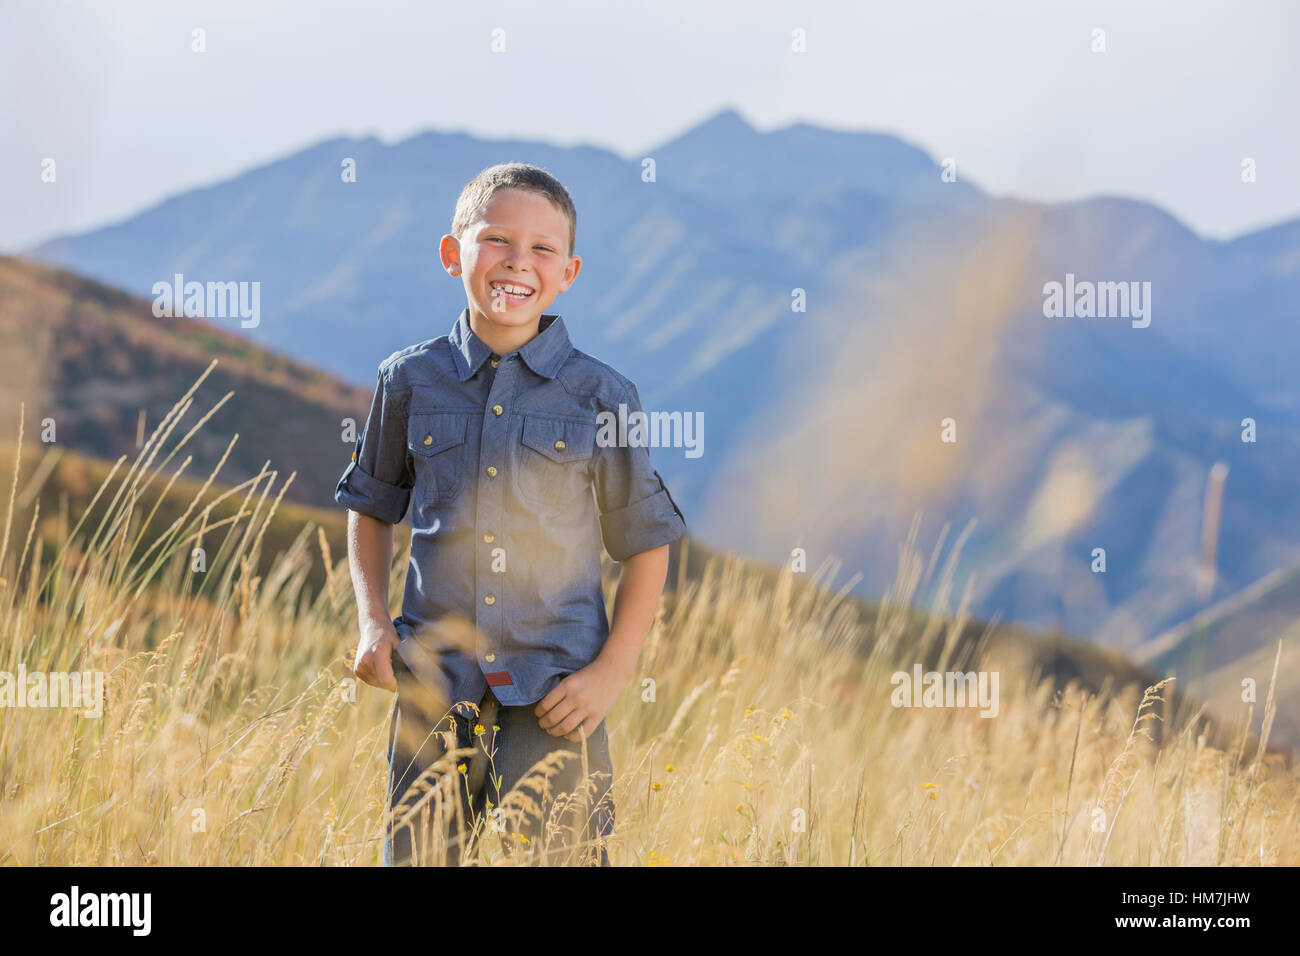 USA, Utah, Provo, Boy (6-7) standing in field Stock Photo